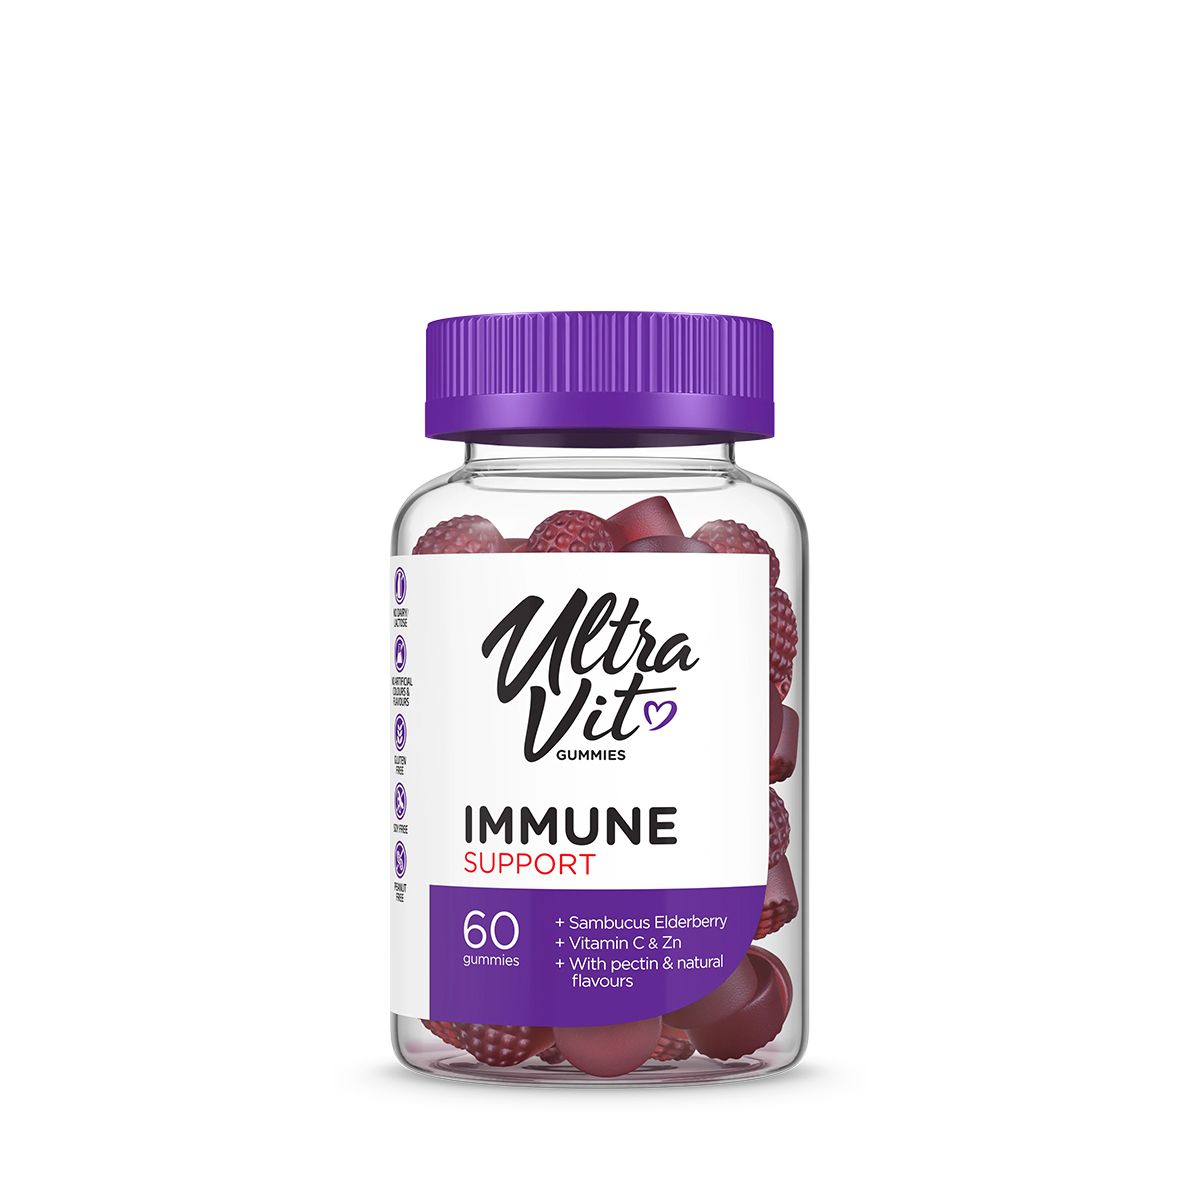 Immunrendszer erősítő, UltraVit Immune Support Gummies, 60 gumicukor